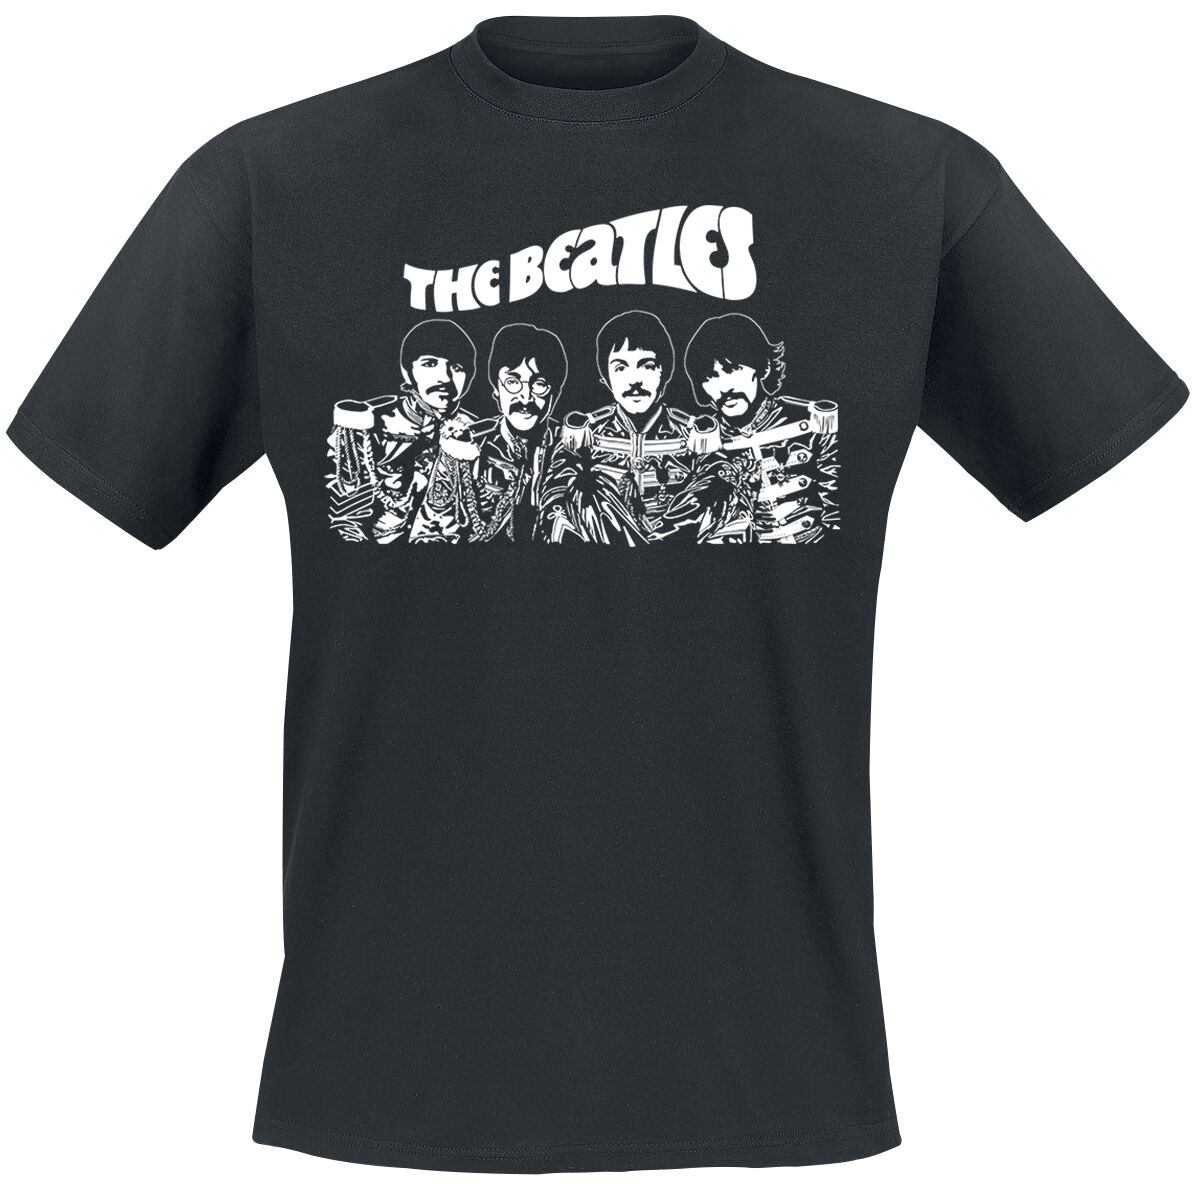 The Beatles Sgt Peppers Cartoon T-Shirt black